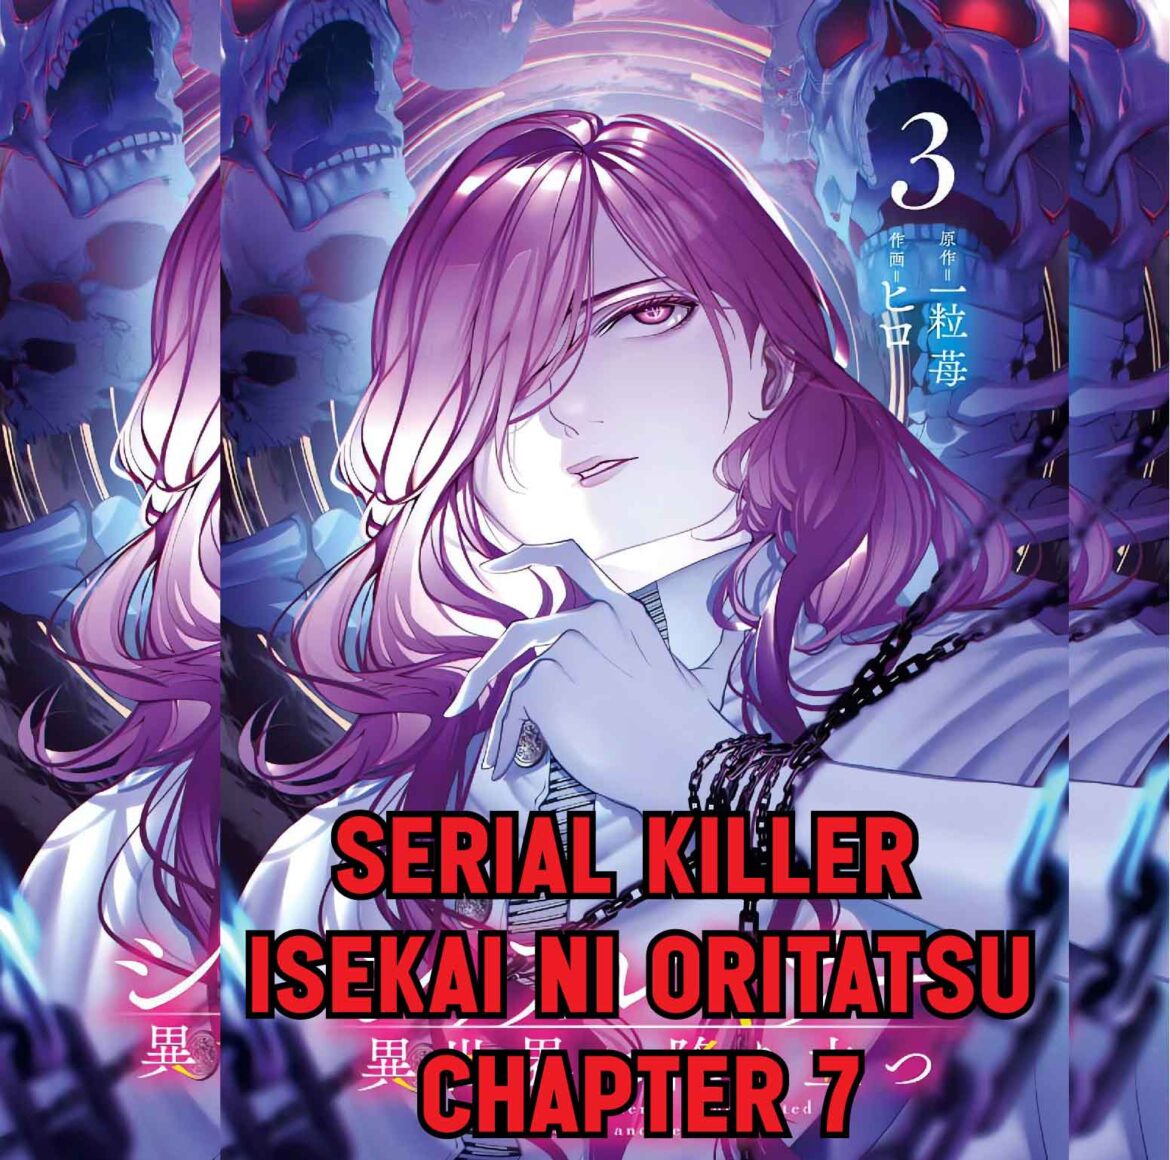 Mystery of Serial Killer Isekai ni Oritatsu Chapter 7